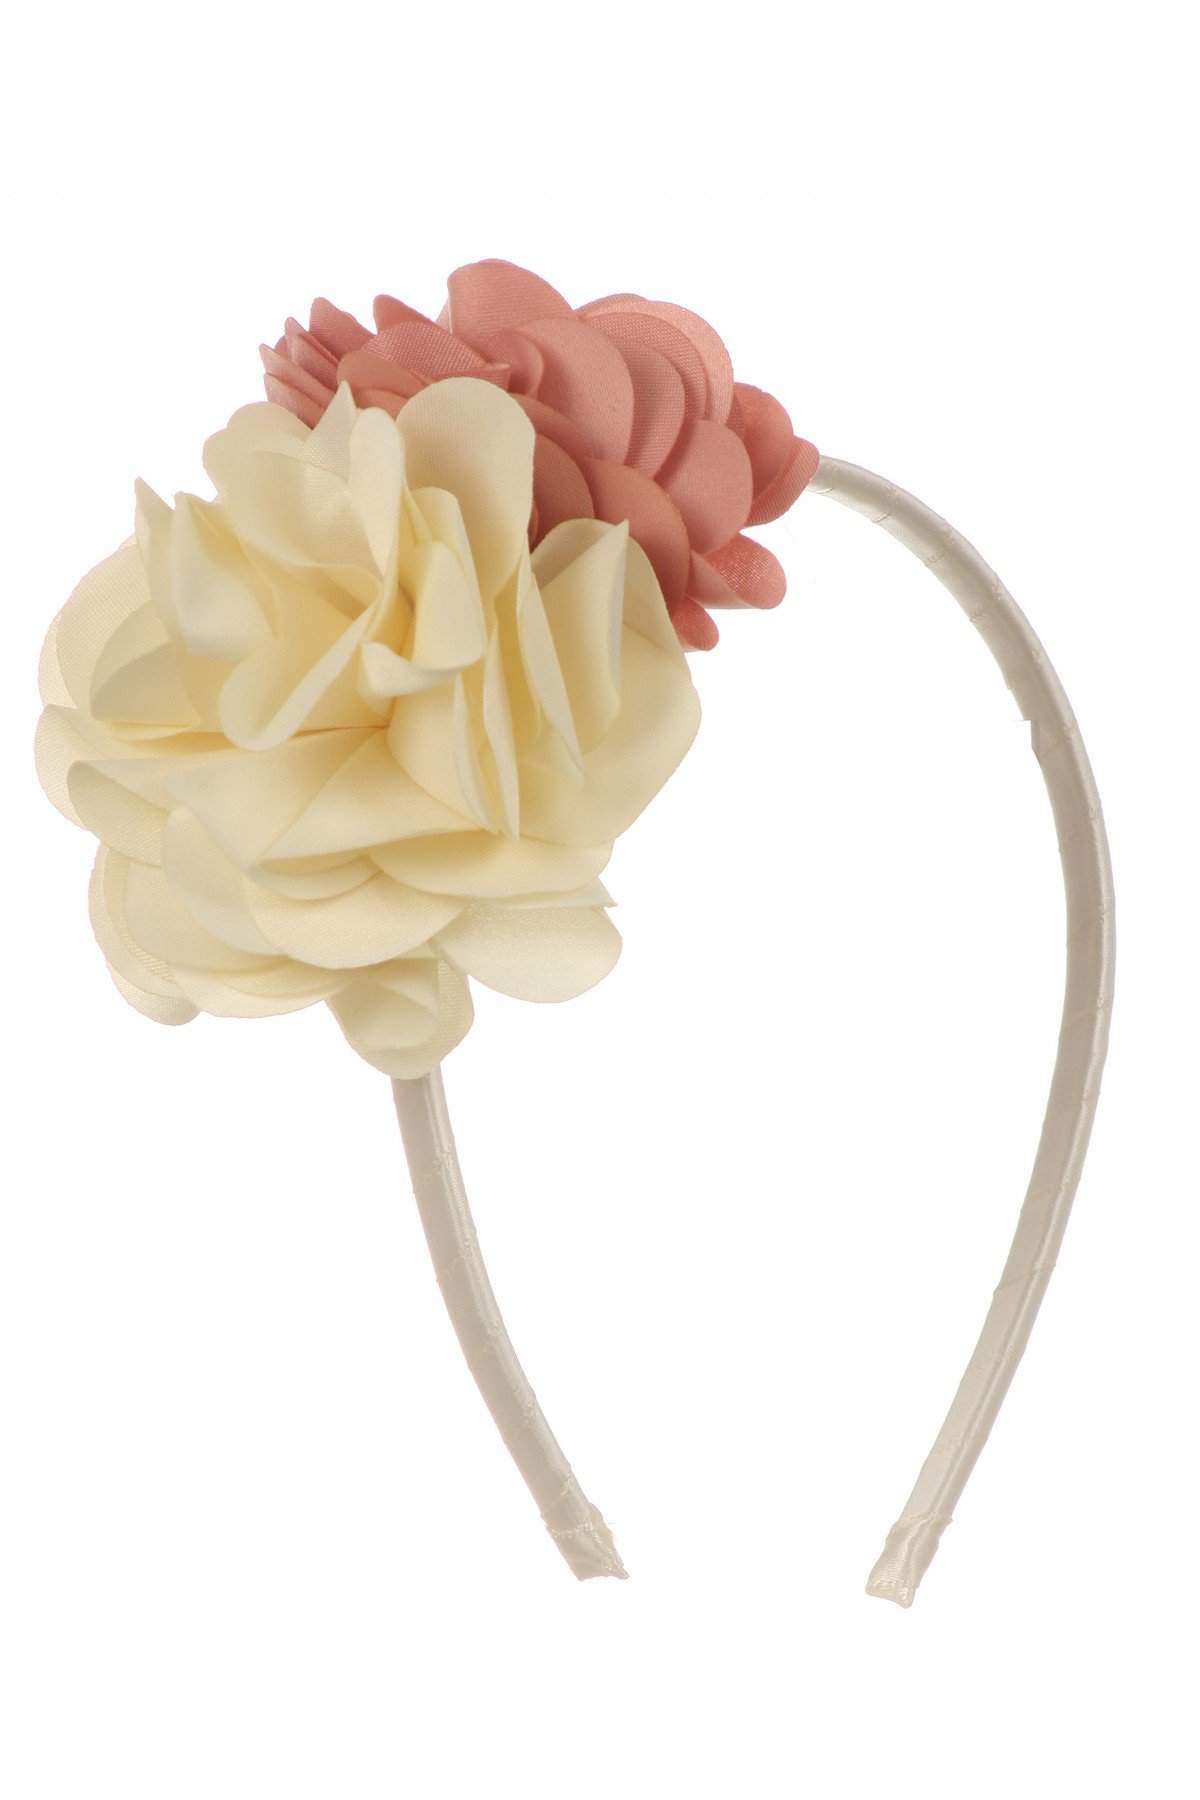 Double Satin Flower Headband (6pk)-Kid's Dream-1_2,3_4,5_6,7_8,big_girl,color_White,fabric_Satin,little_girl,size_02,size_04,size_06,size_08,size_10,size_12,size_14